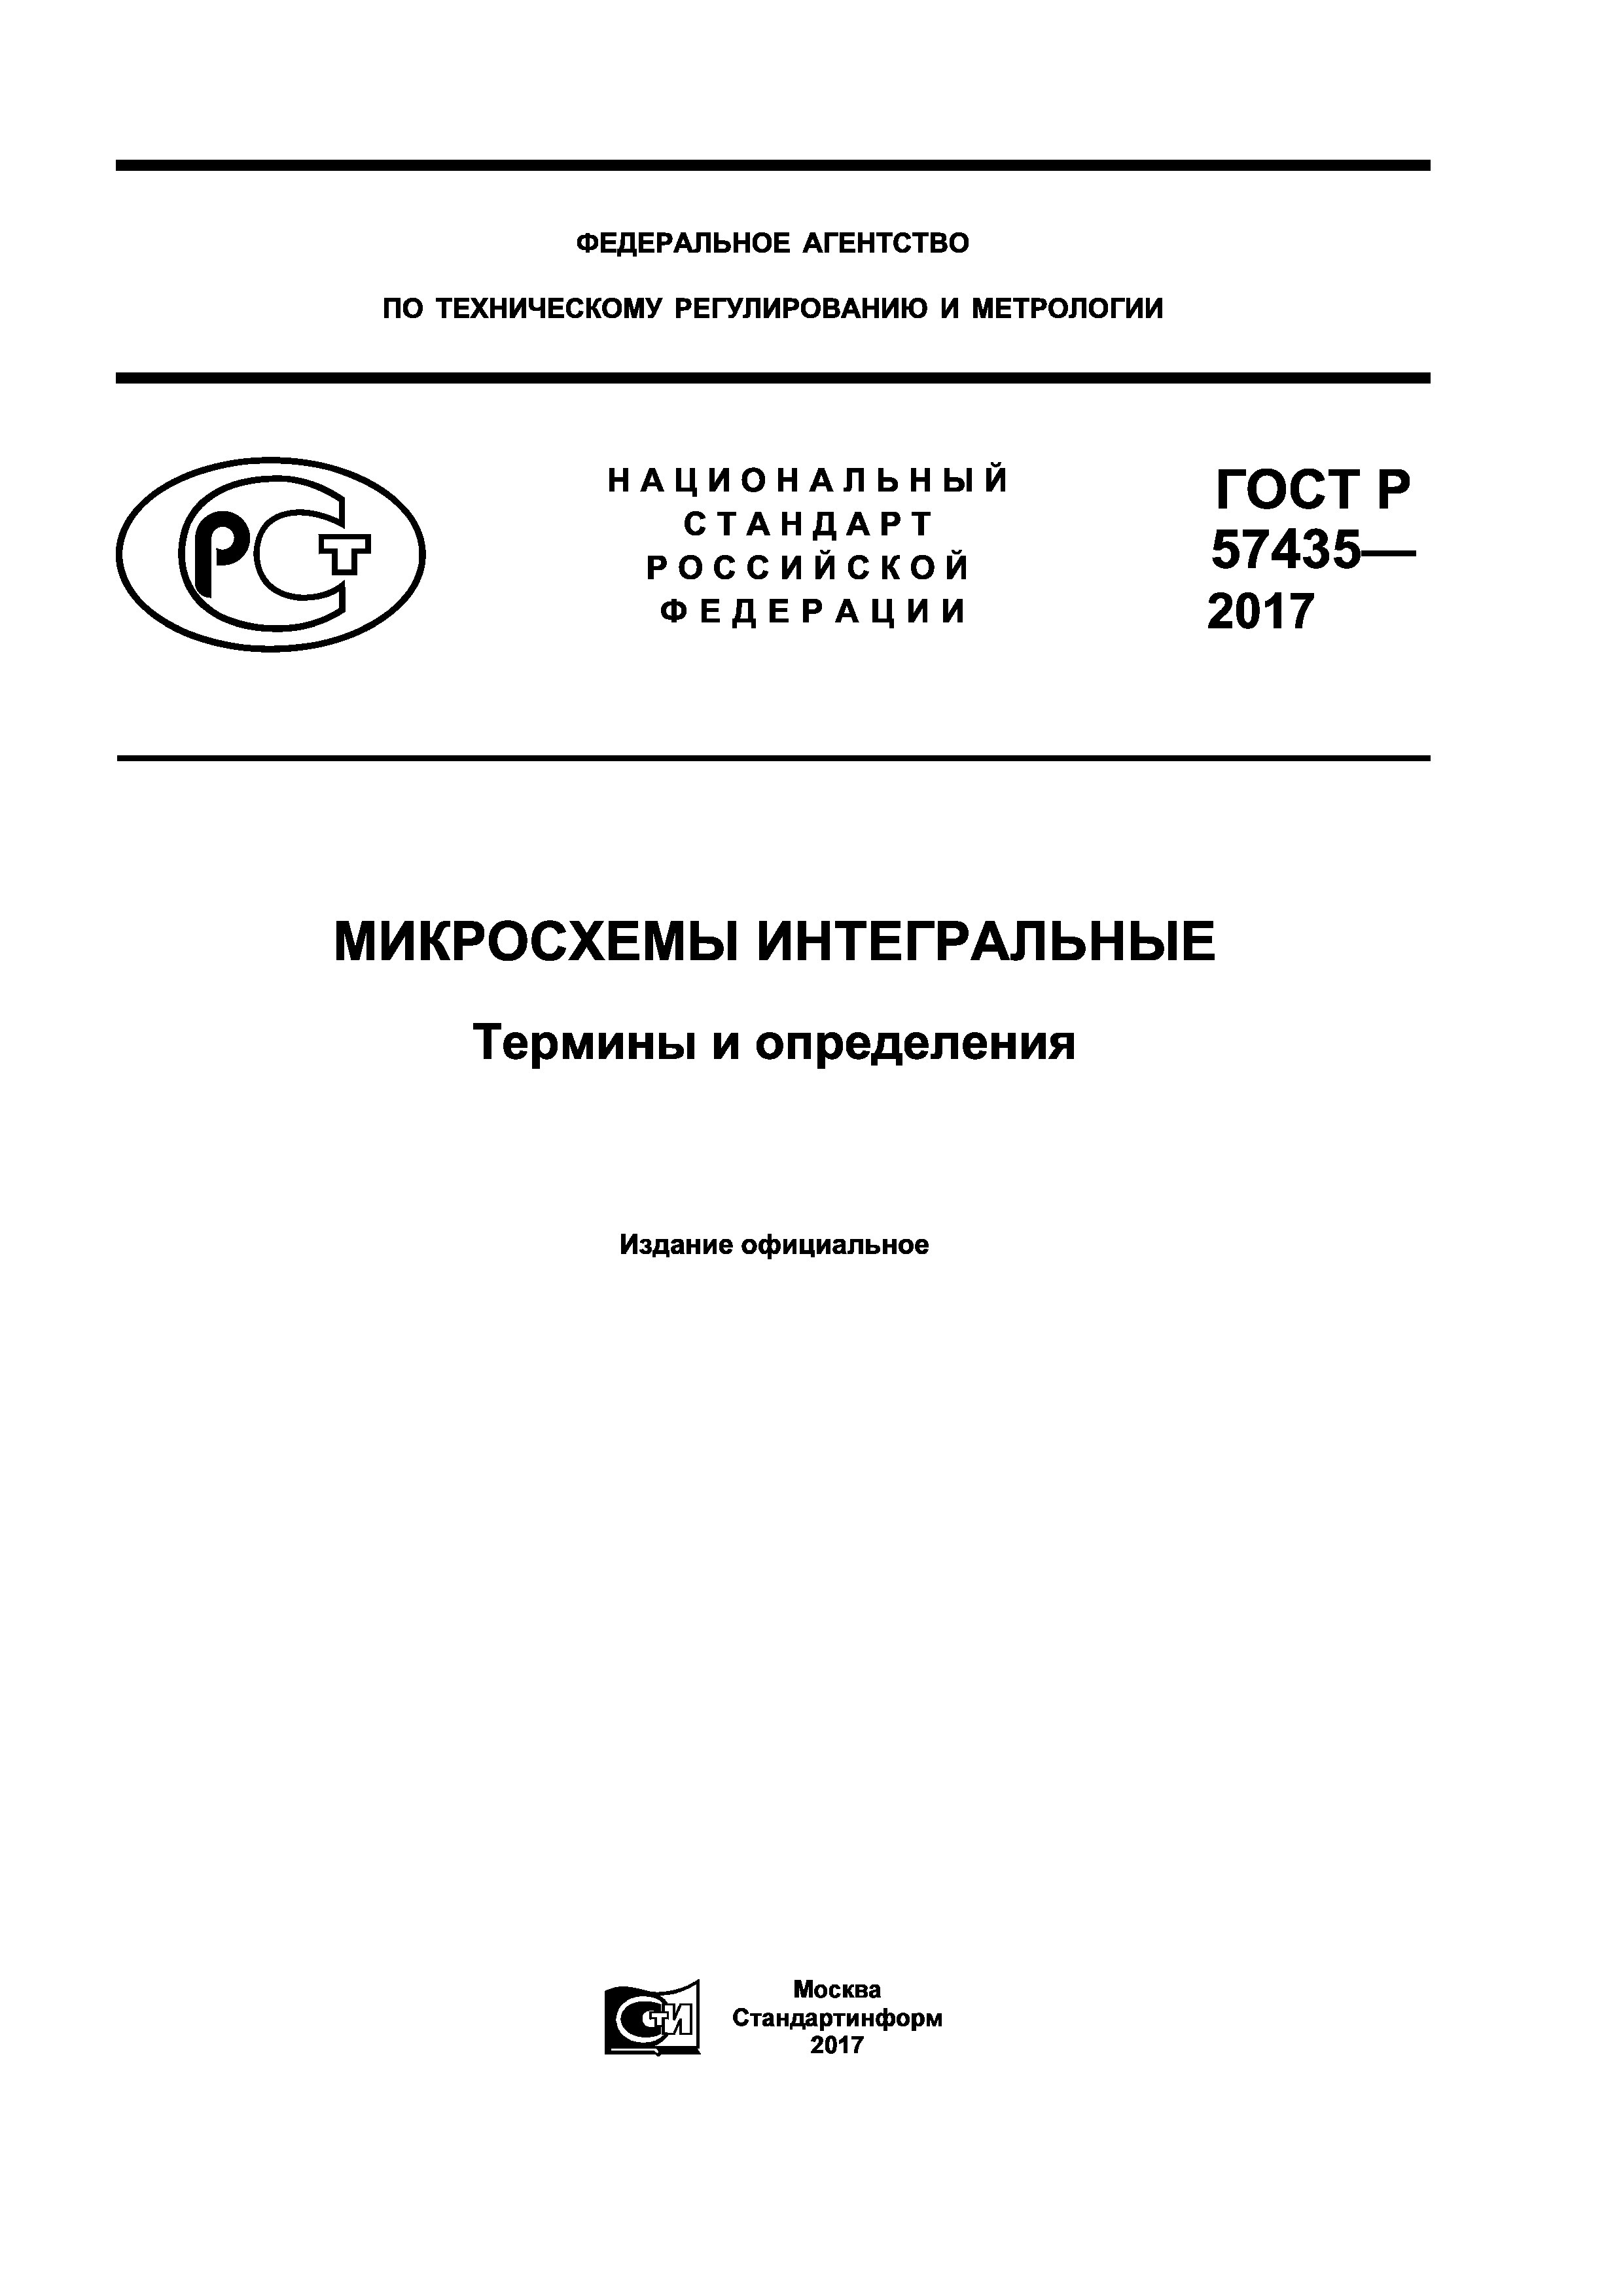 ГОСТ Р 57435-2017